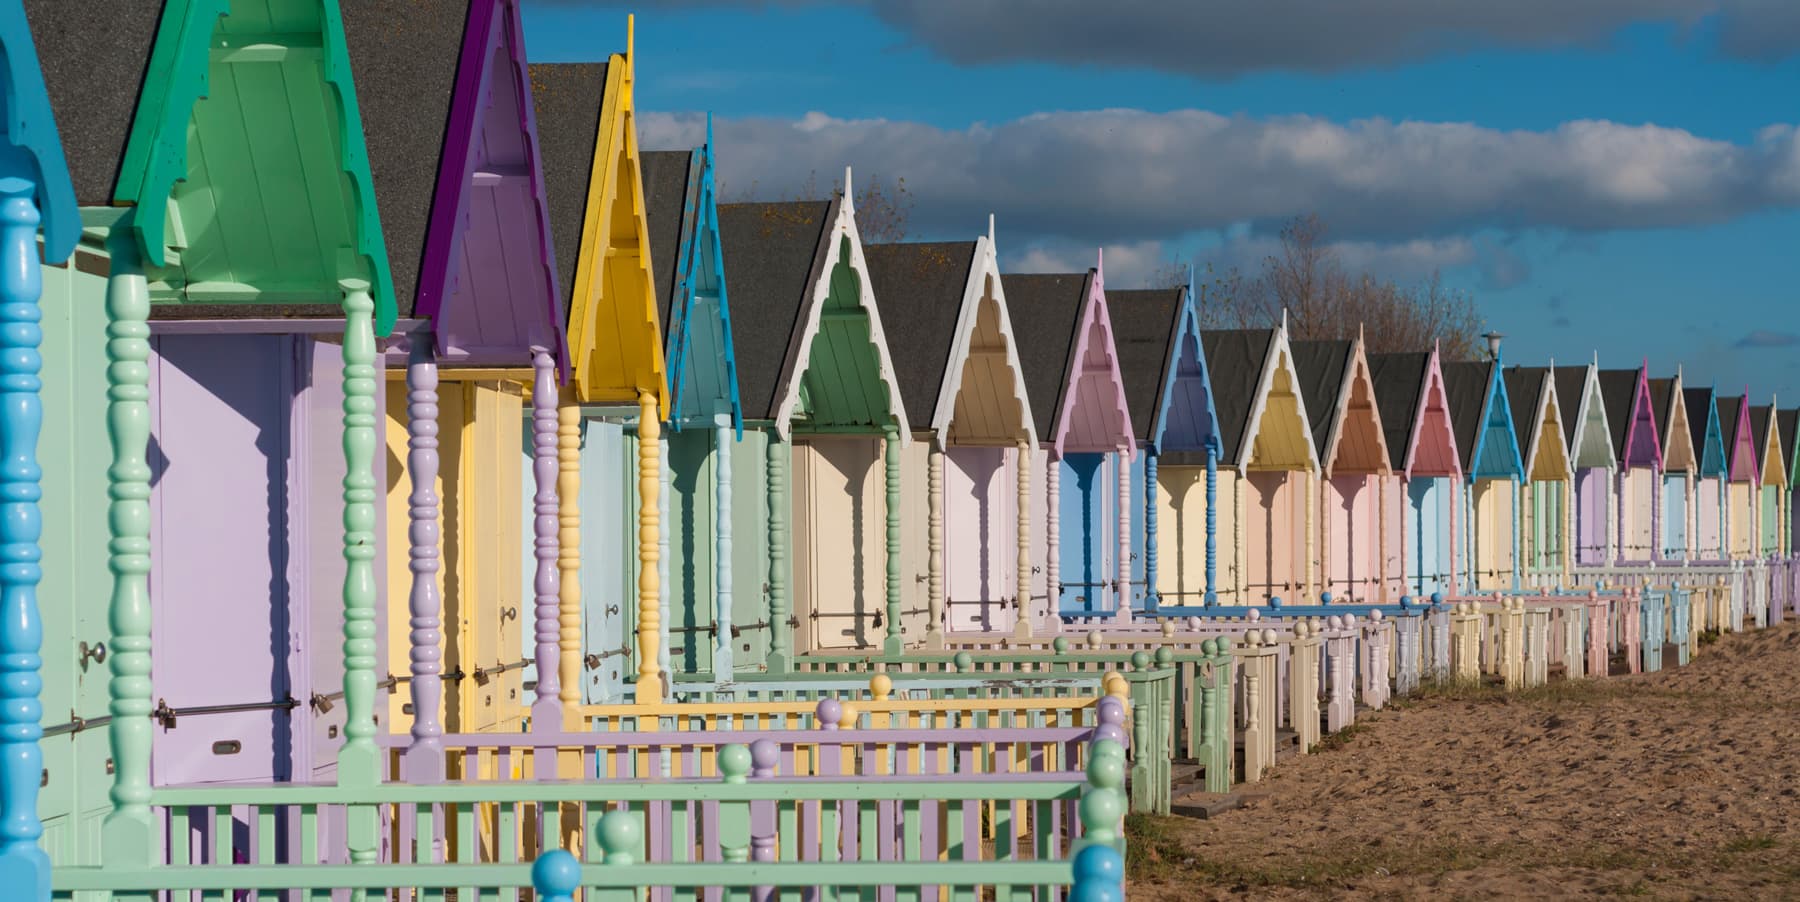 Colourful beach huts found in East Essex